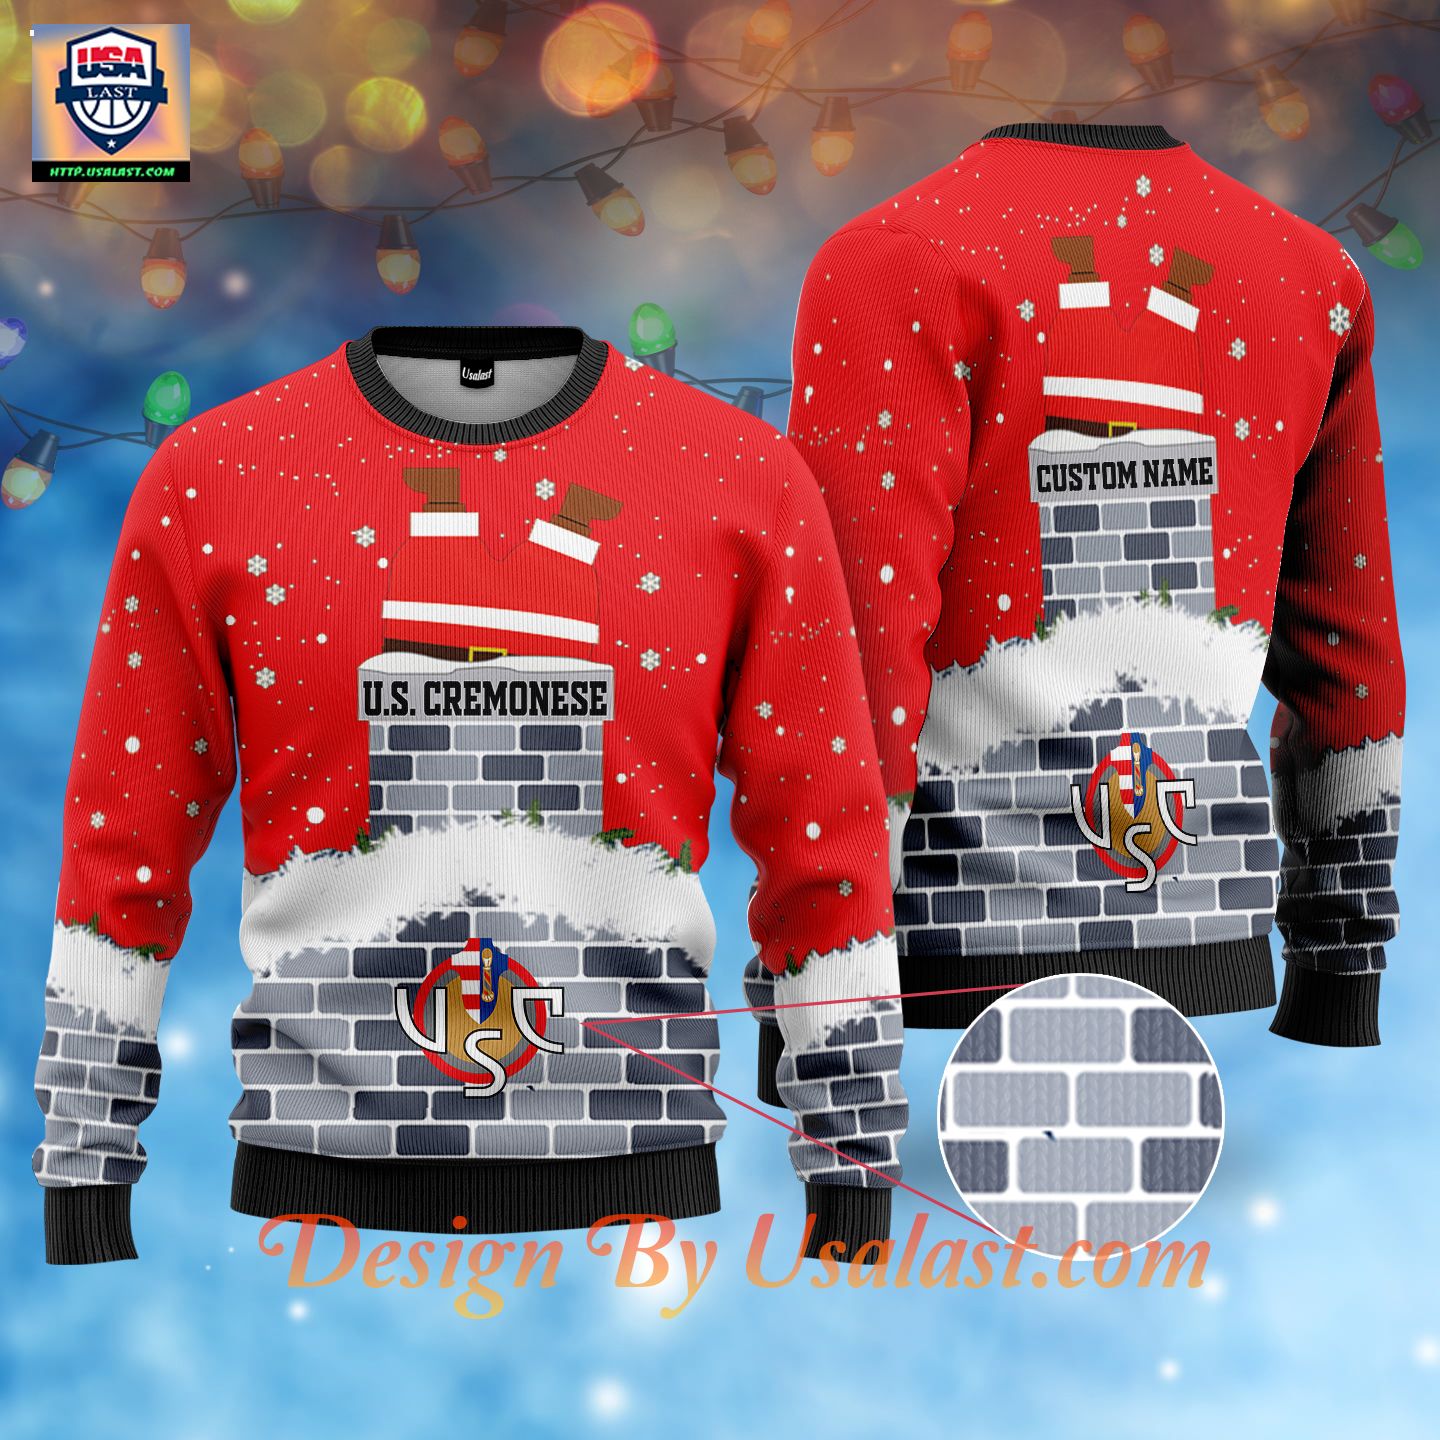 Best Sale U.S Cremonese Santa Claus Custom Name Red Ugly Christmas Sweater